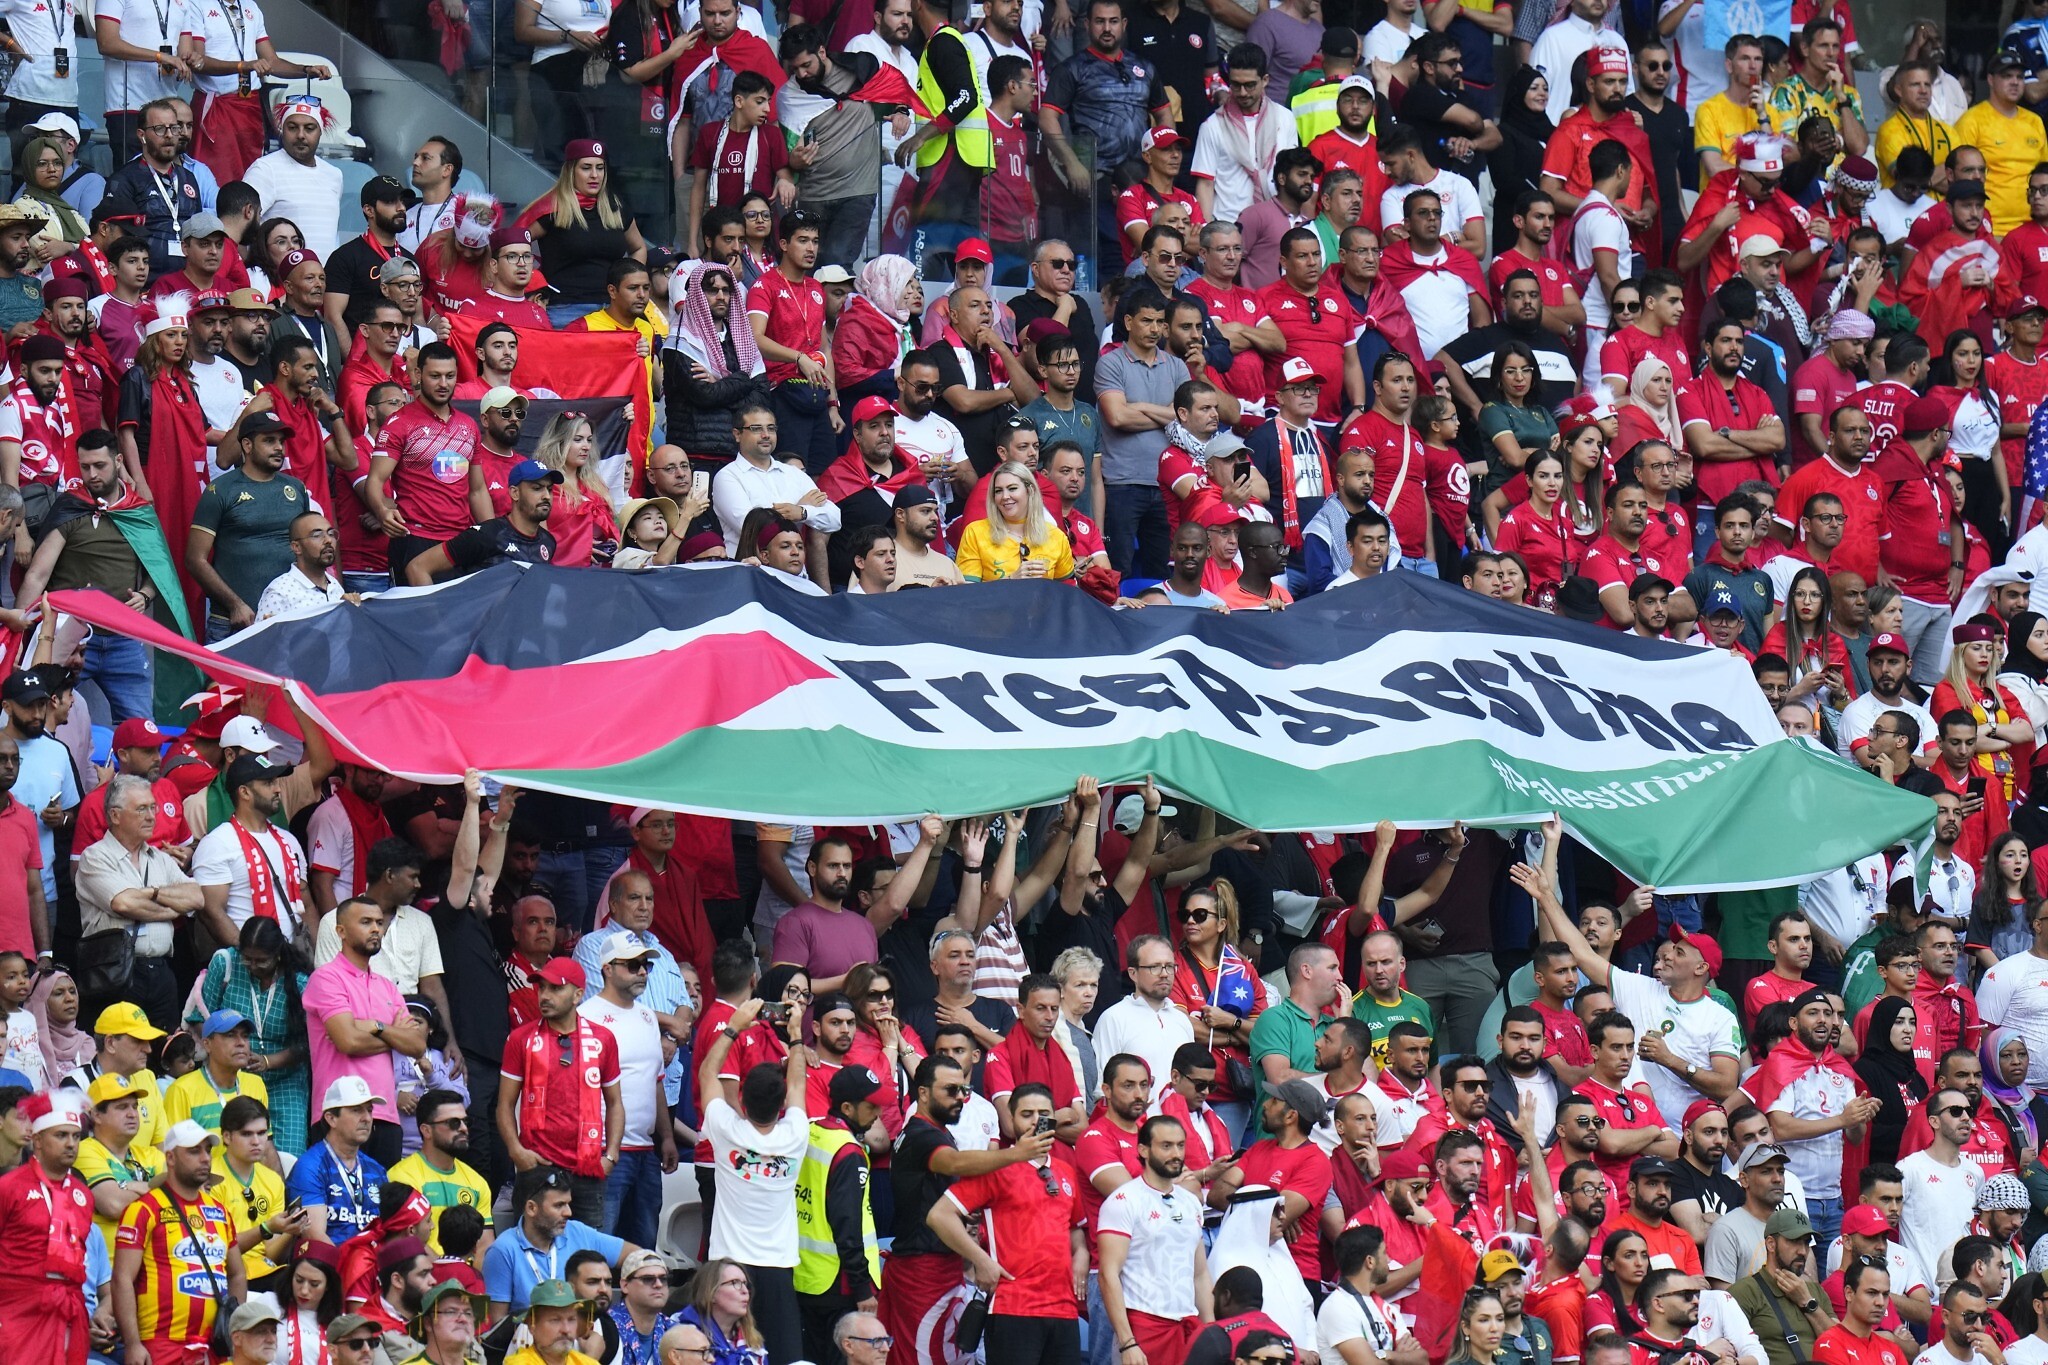 Palestine national team soccer jersey 2021 2022